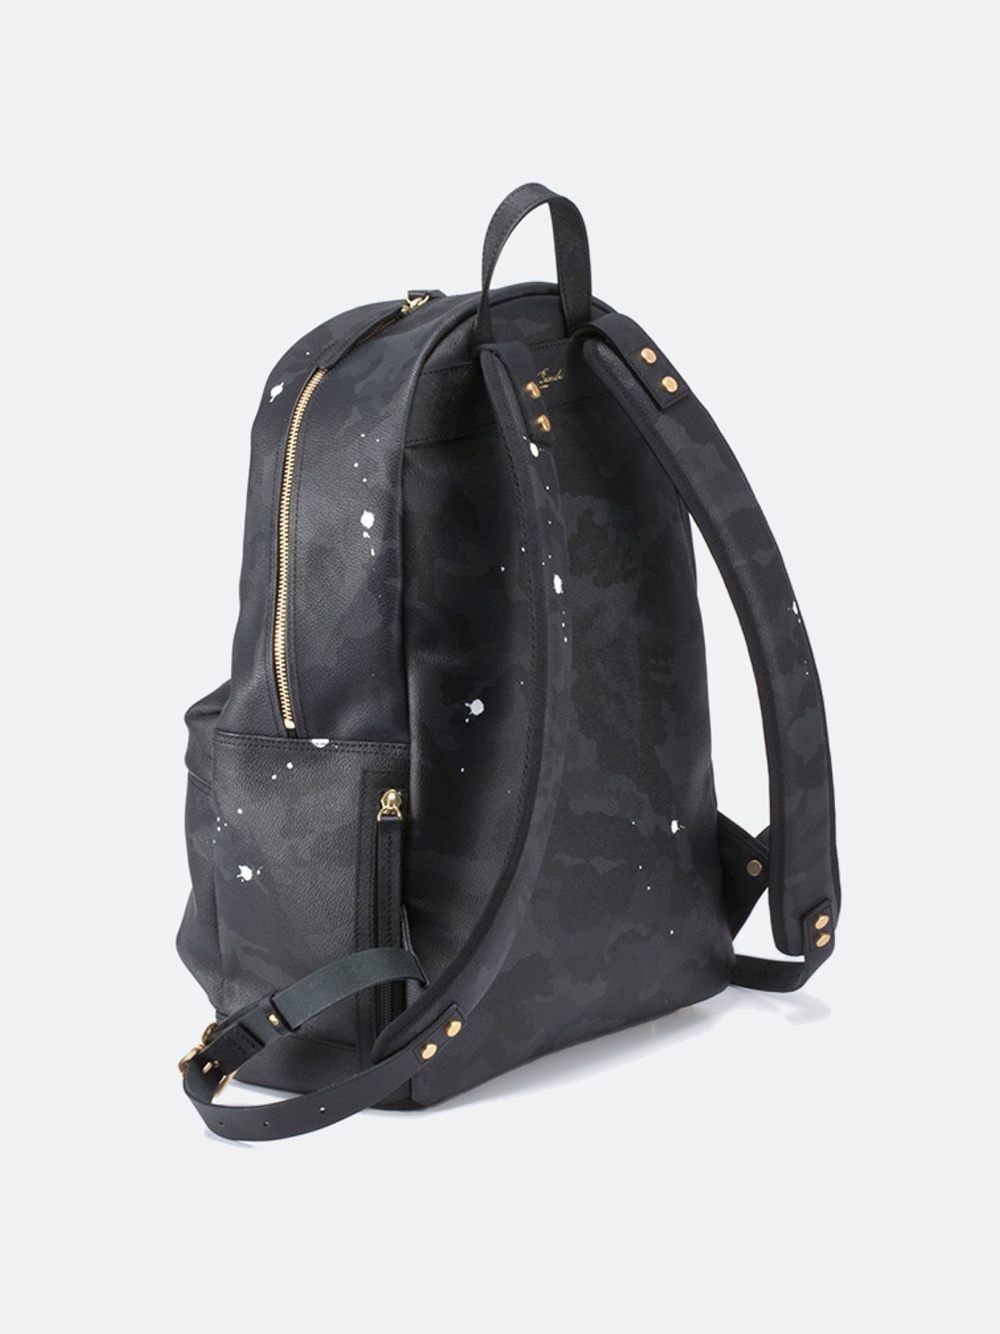 Gentil Bandit: Backpack in Black Camo | Gotengo Menswear